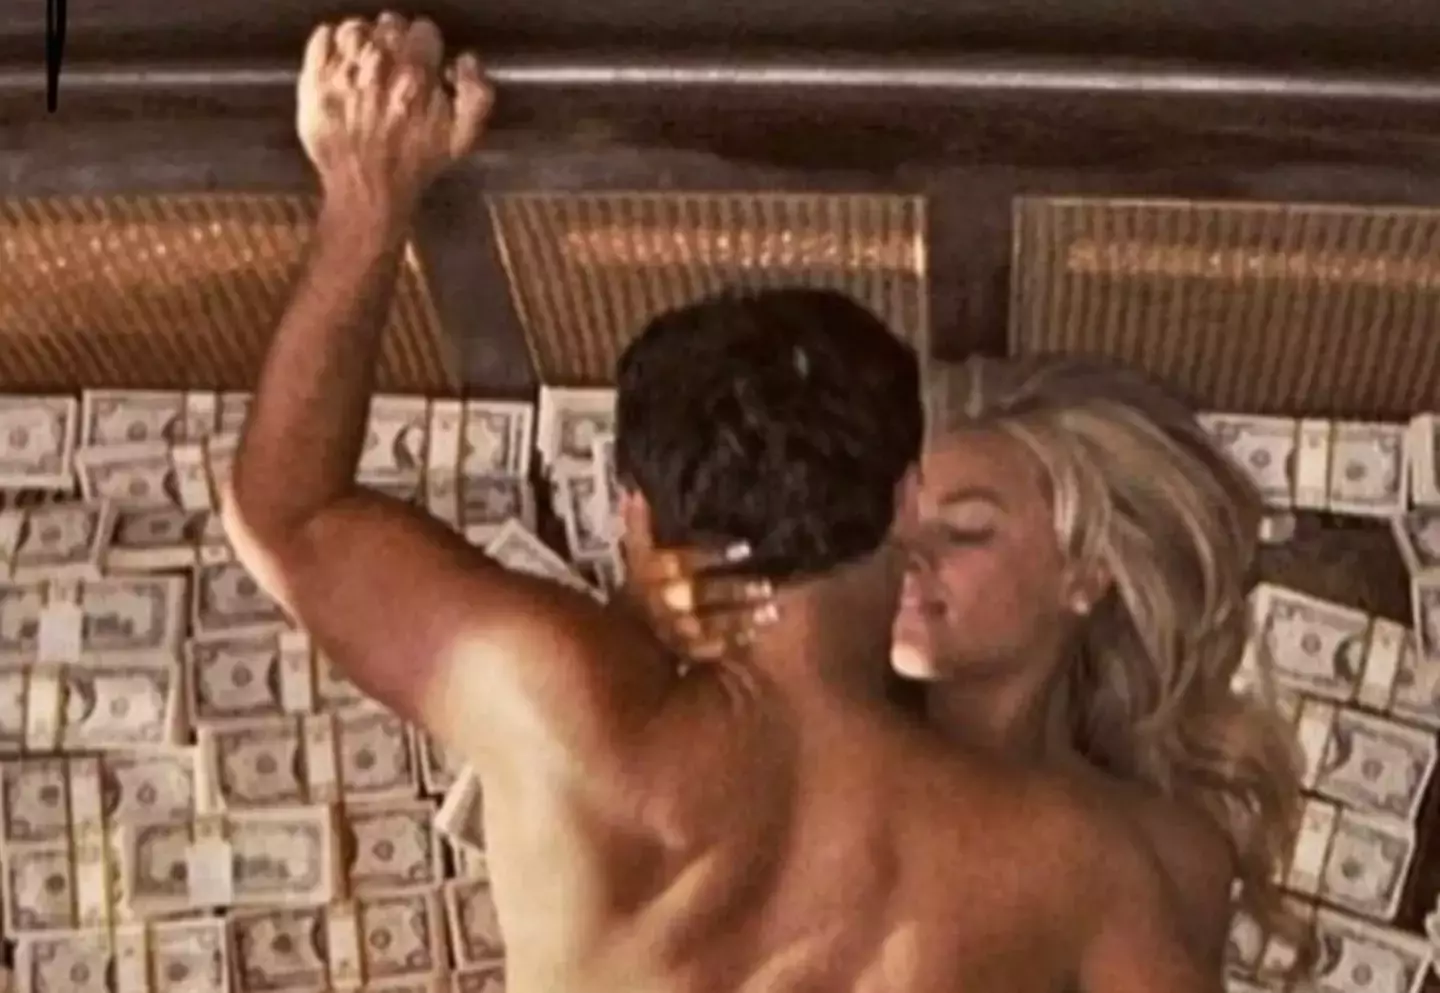 Having sex on piles of cash isn't as good as it looks, according to Margot Robbie (Warner Bros.)